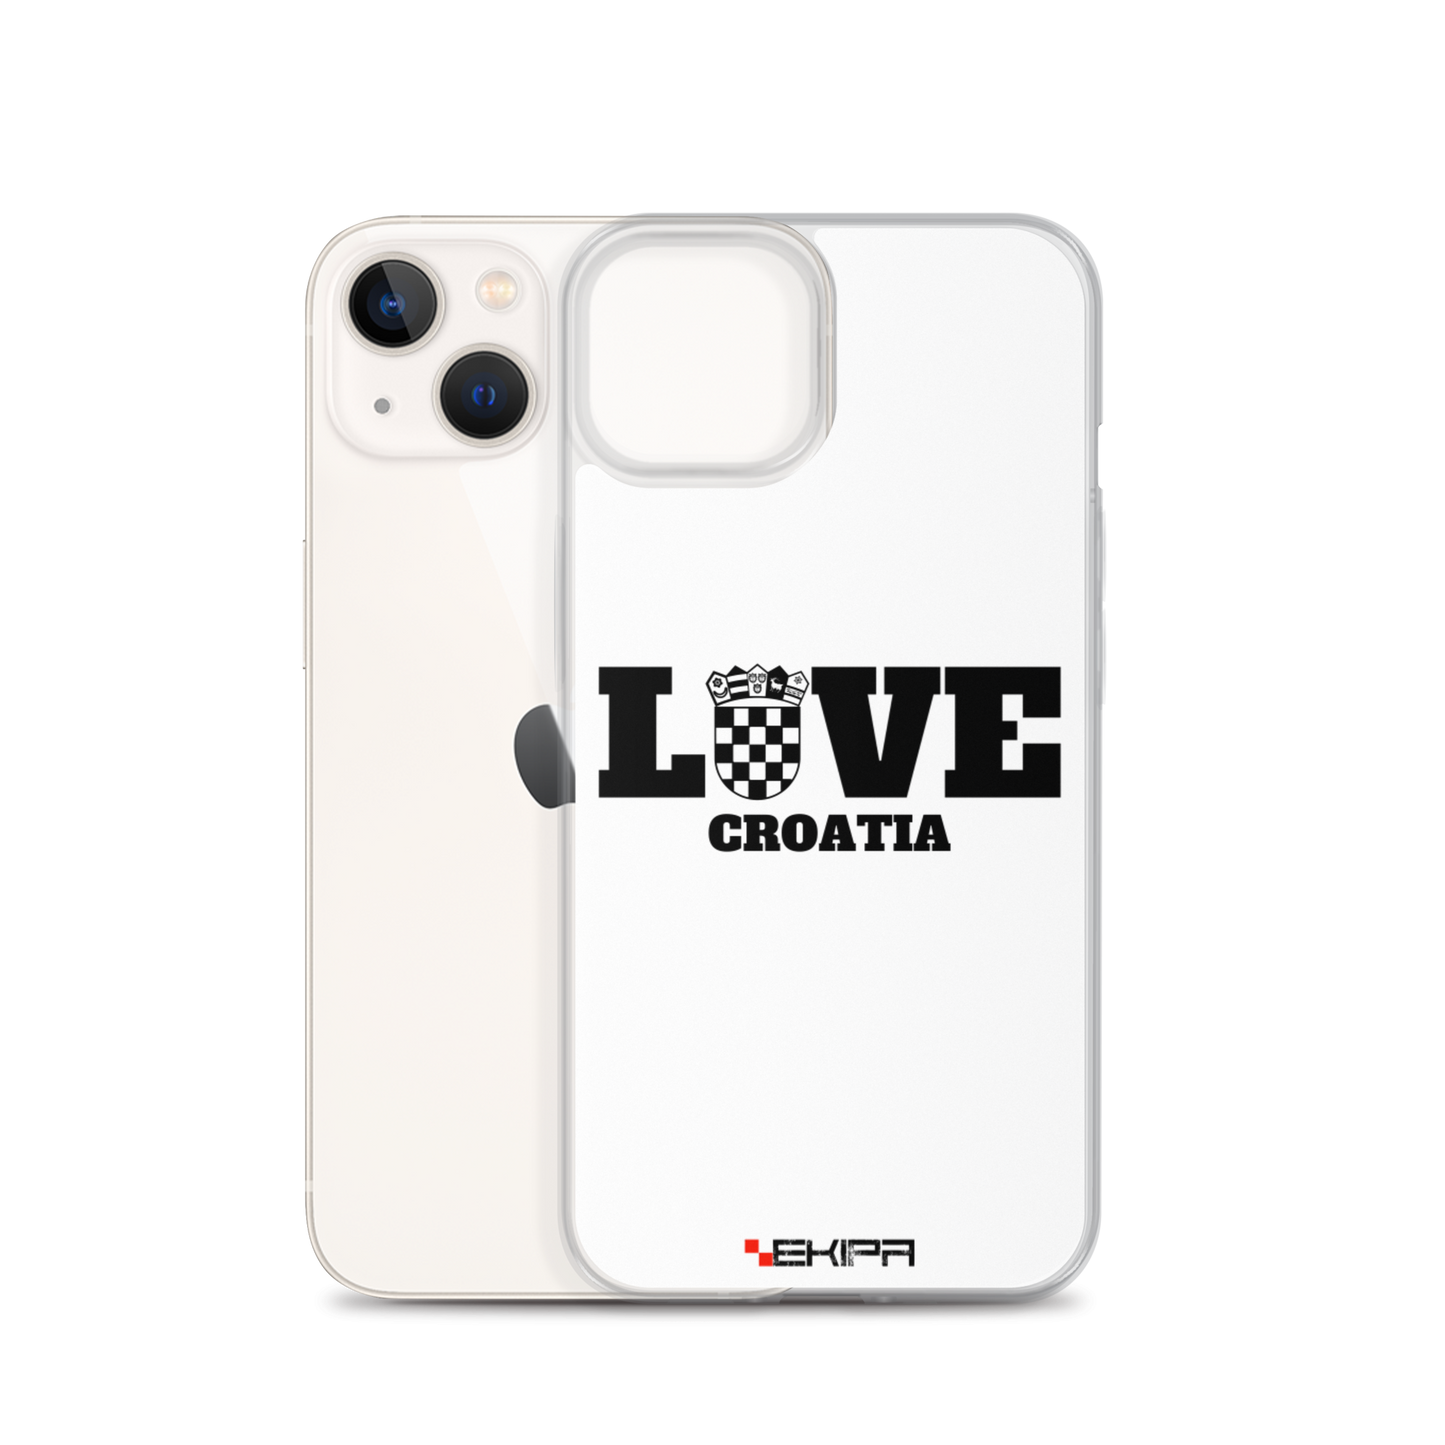 "Love Croatia" - iPhone case